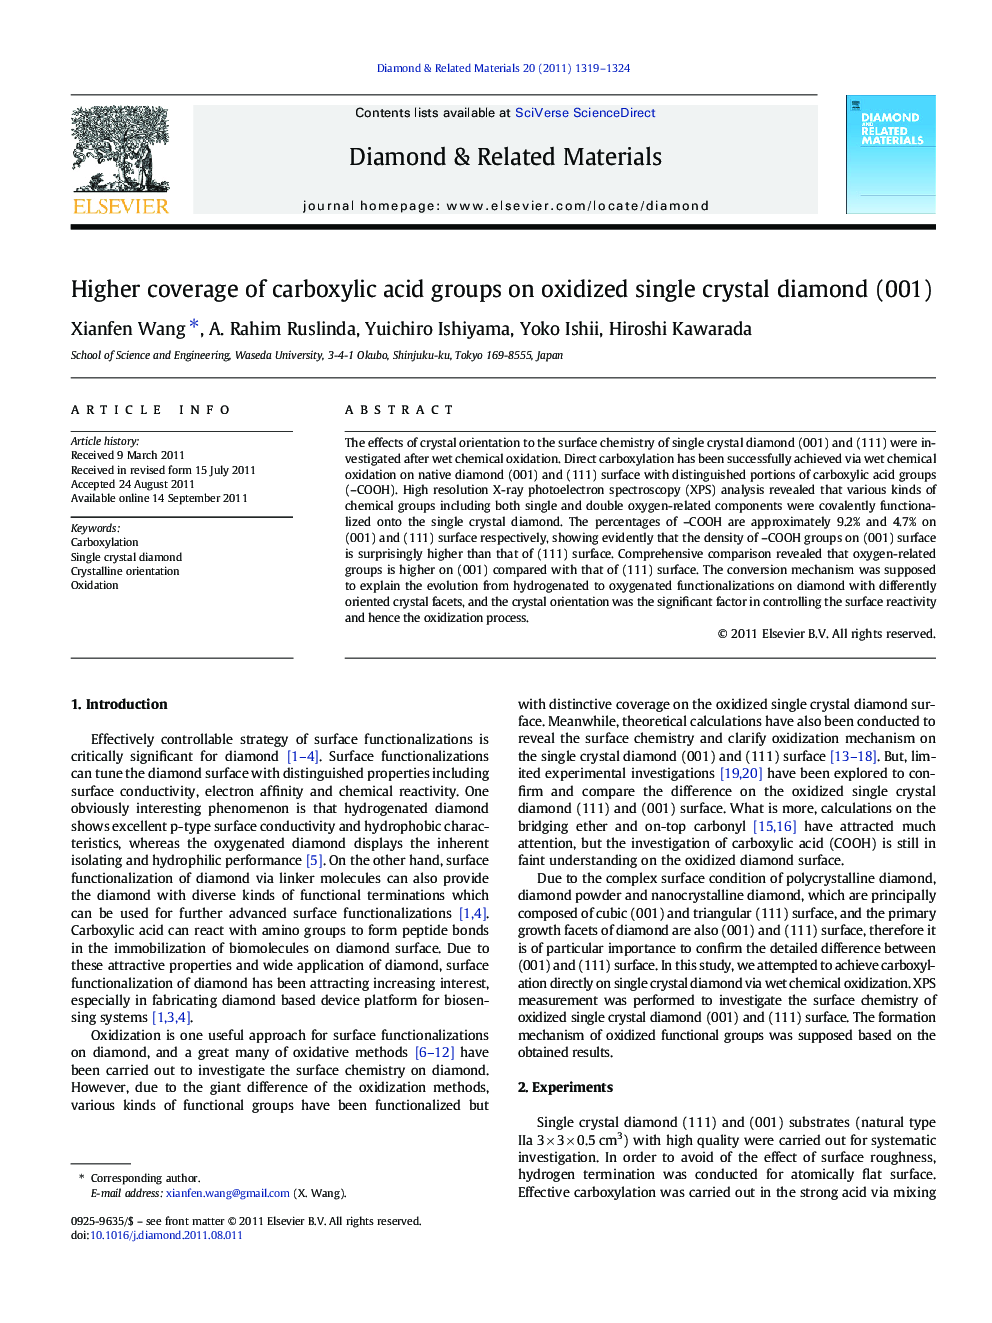 Higher coverage of carboxylic acid groups on oxidized single crystal diamond (001)